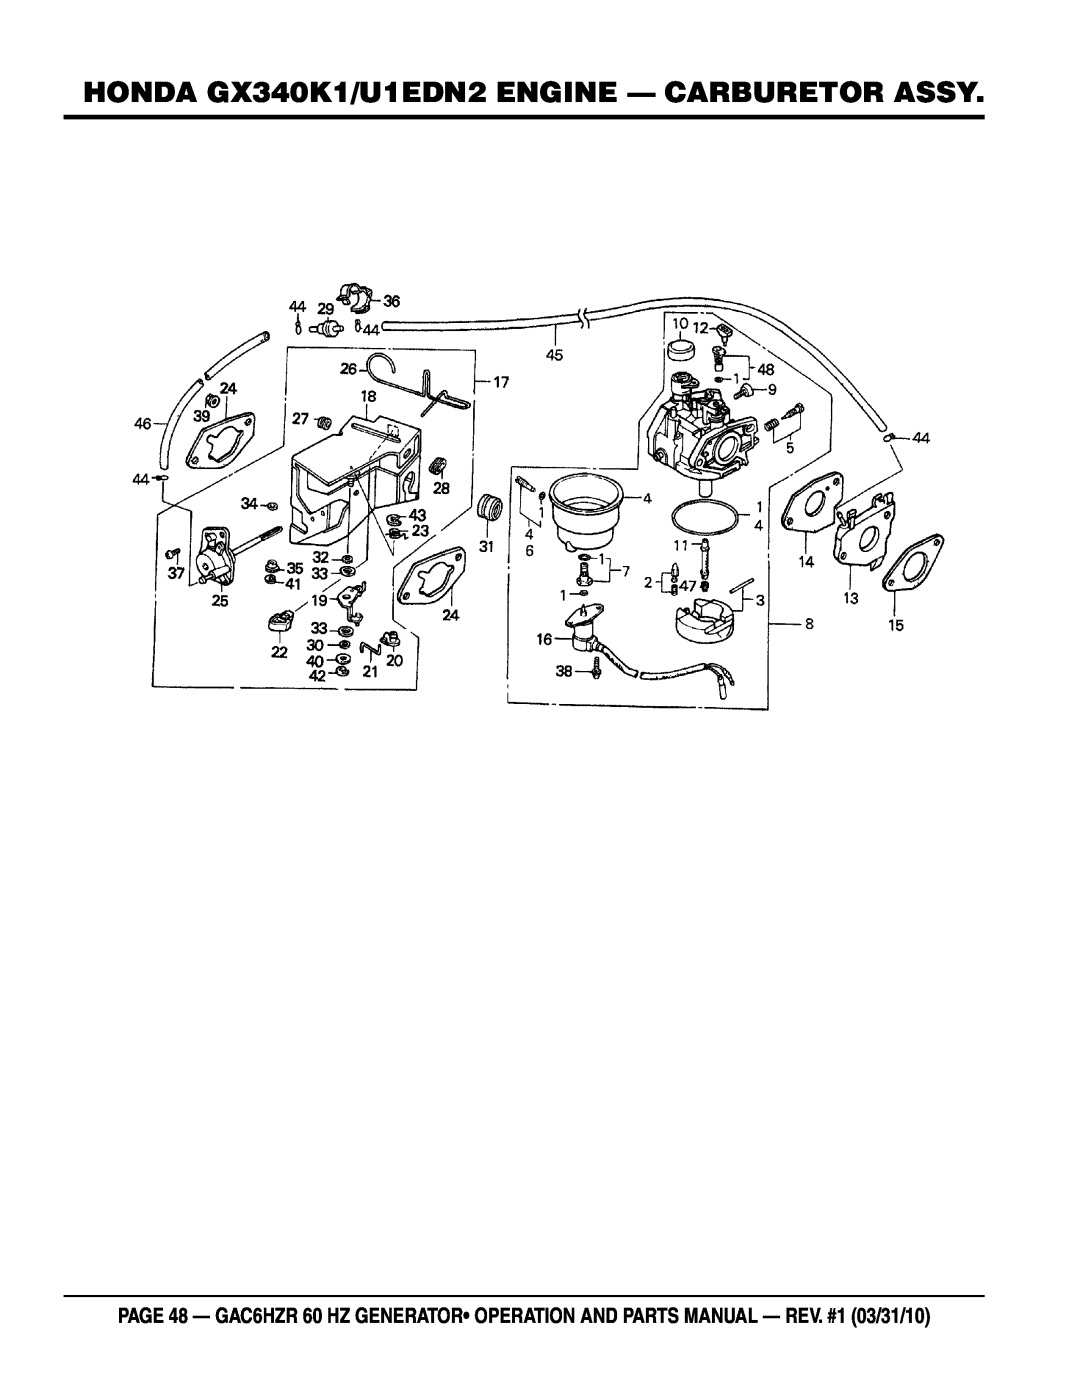 Multiquip GAC-6HZR manual HONDA GX340K1/U1EDN2 ENGINE - CARBURETOR ASSY 